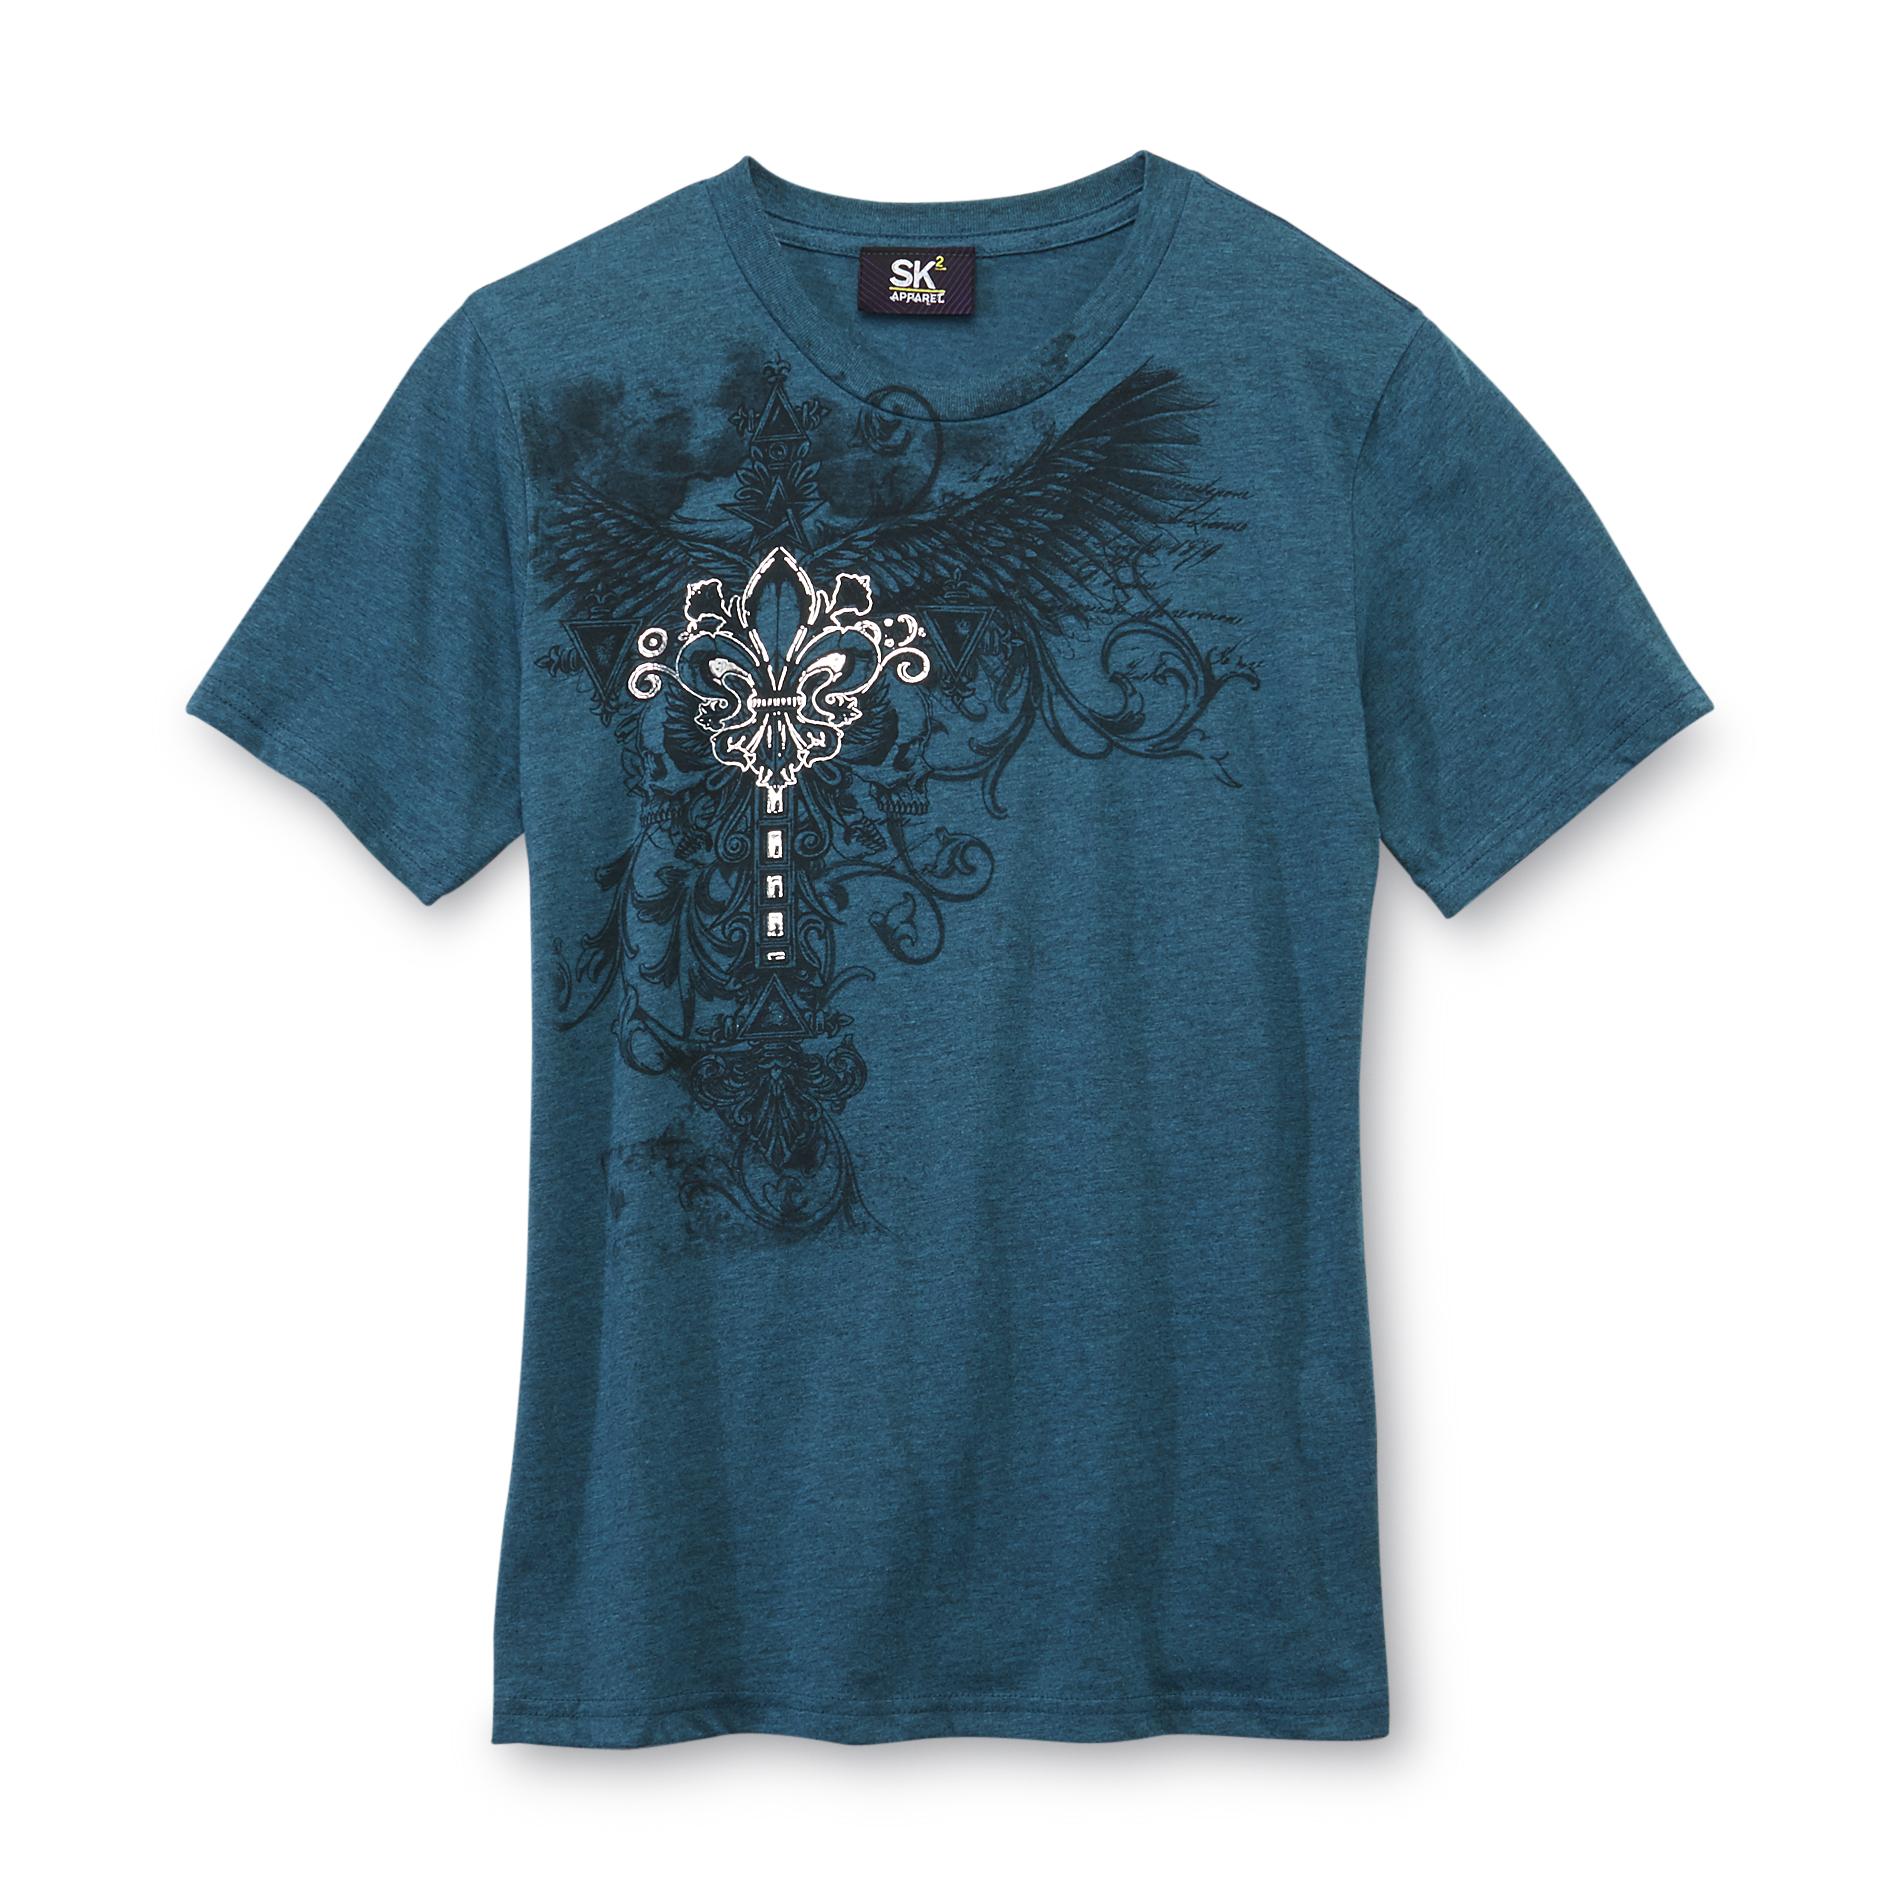 SK2 Boy's Graphic T-Shirt - Winged Metallic Cross